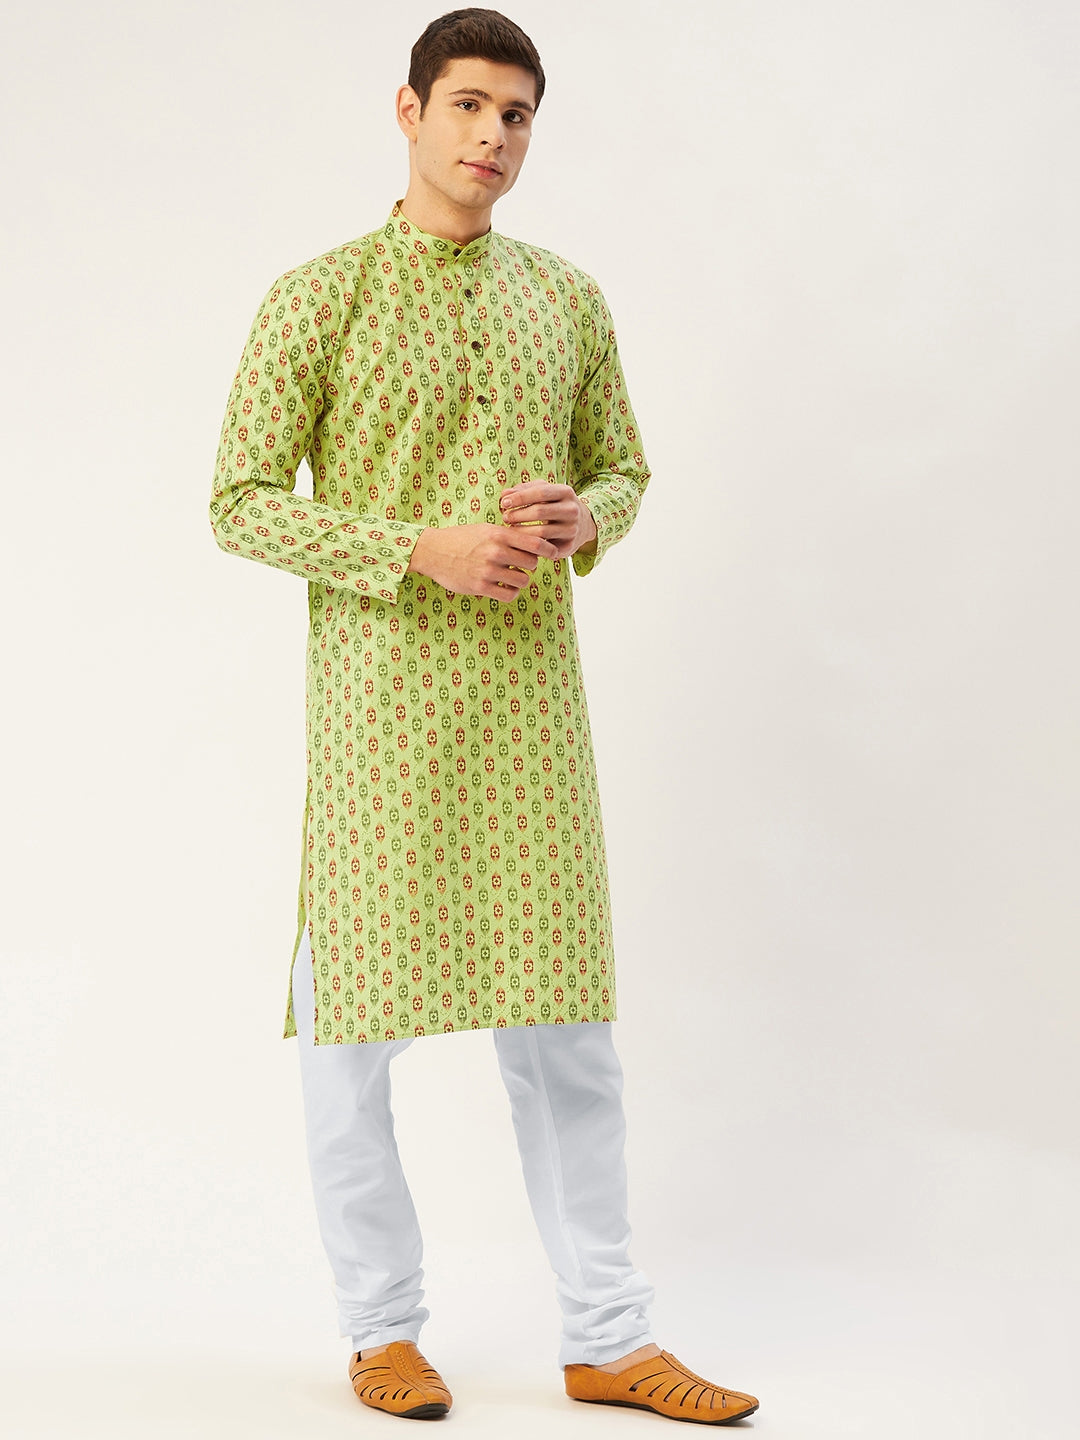 Jompers Men's Green Cotton Ikat printed kurta Pyjama Set